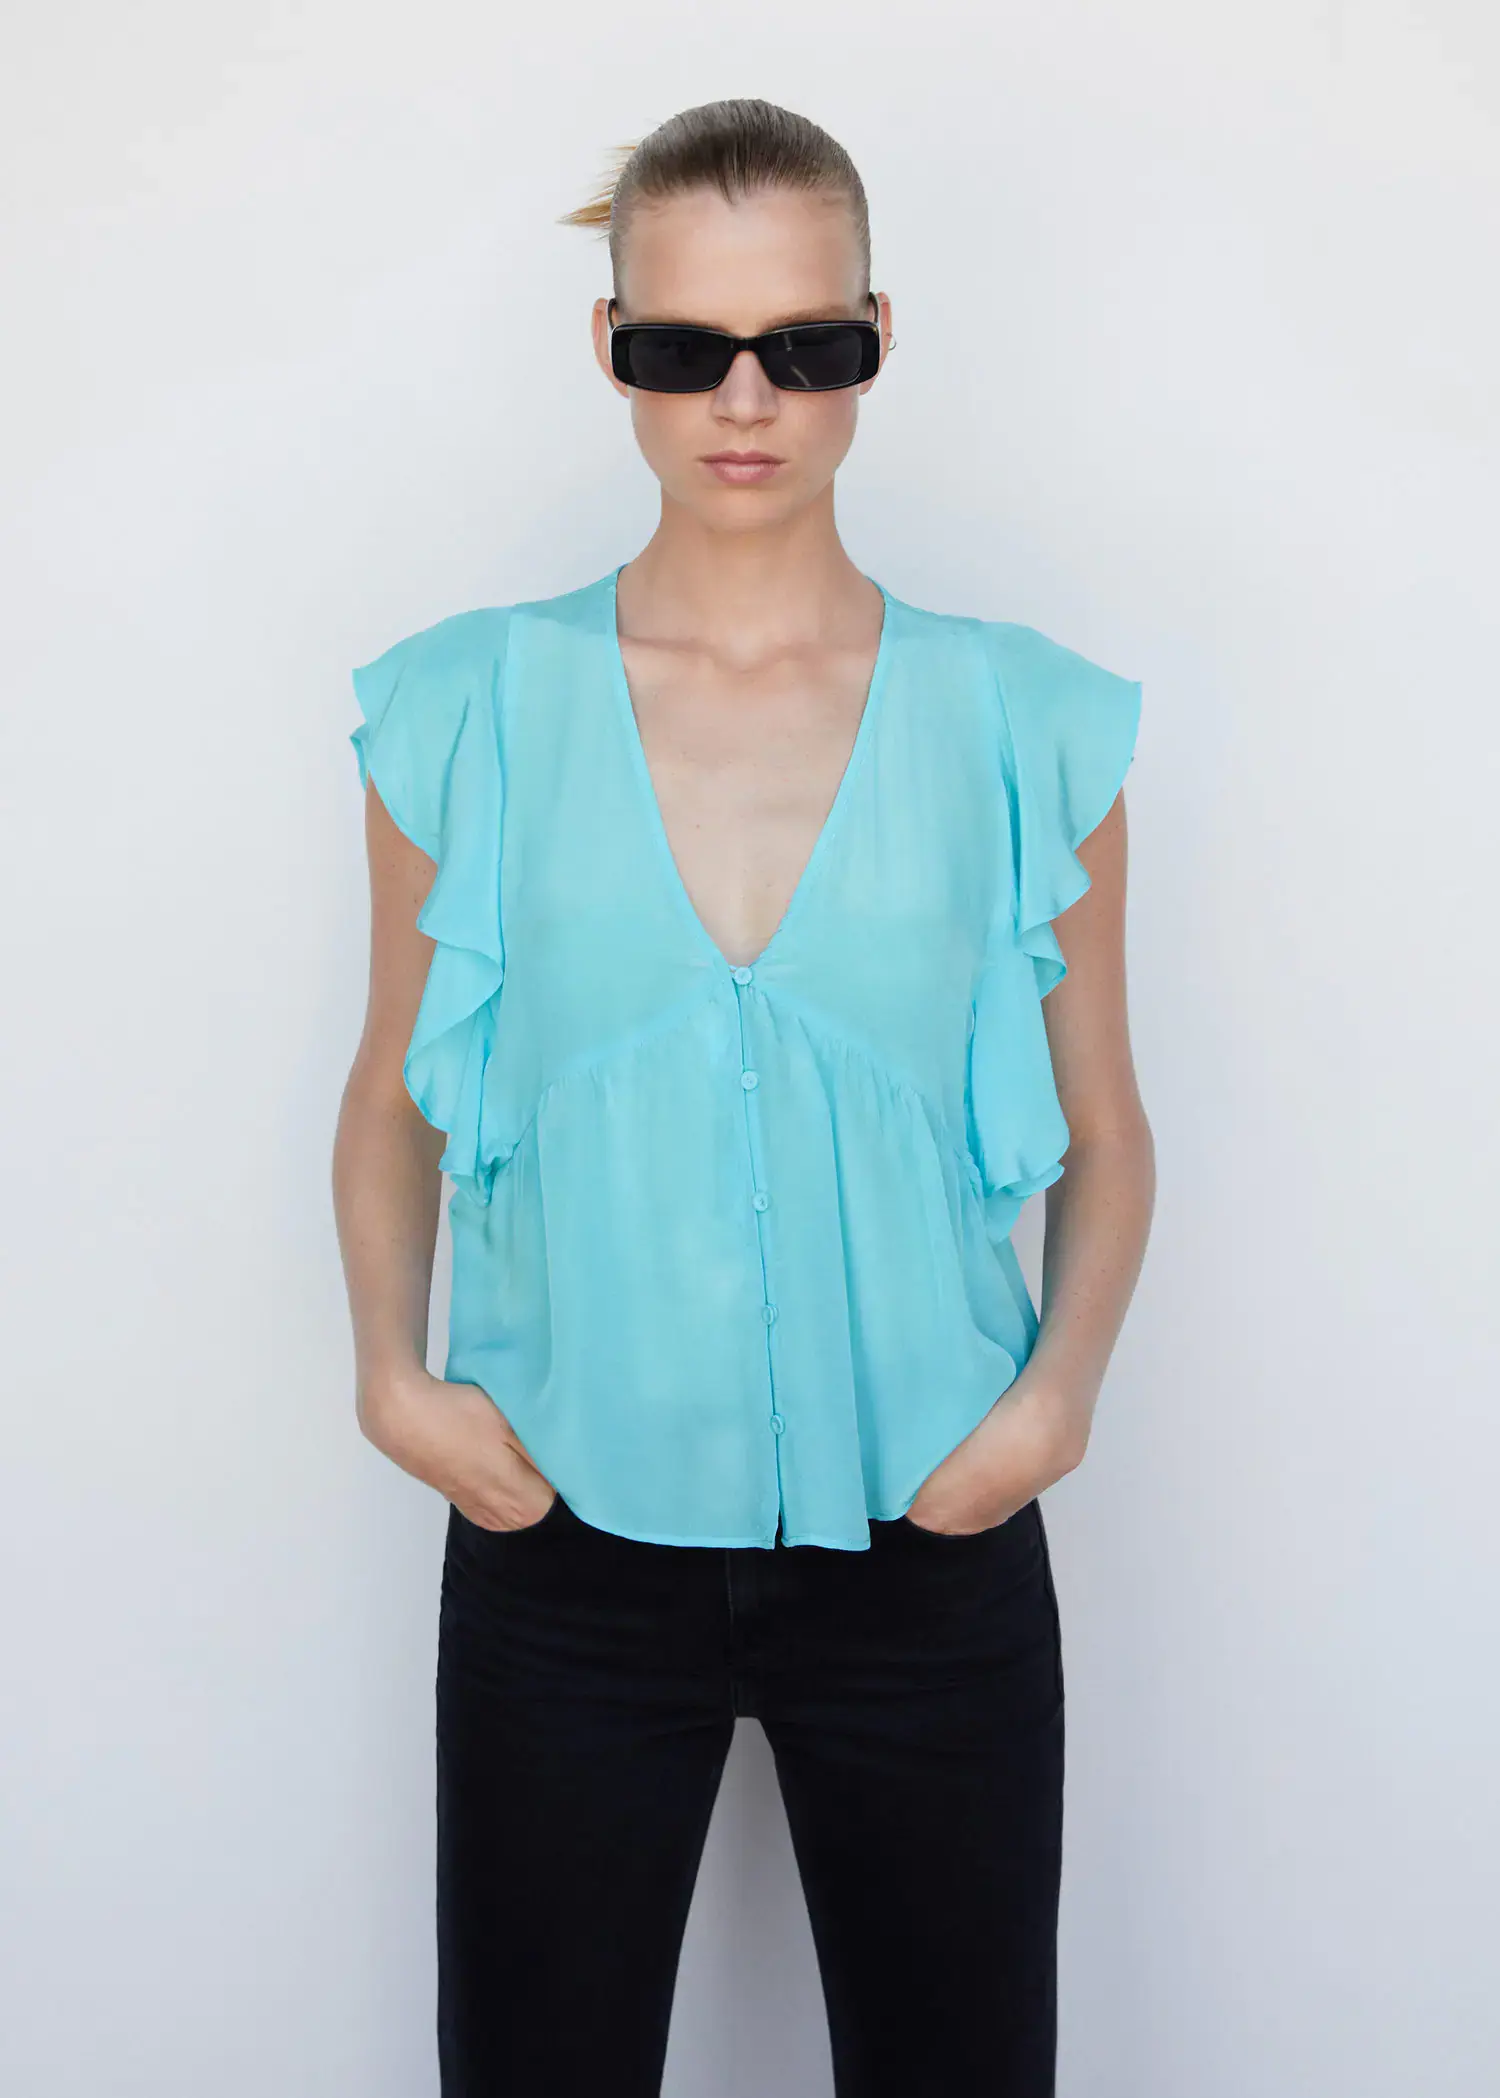 Mango Ruffled blouse. a woman wearing sunglasses and a light blue top. 